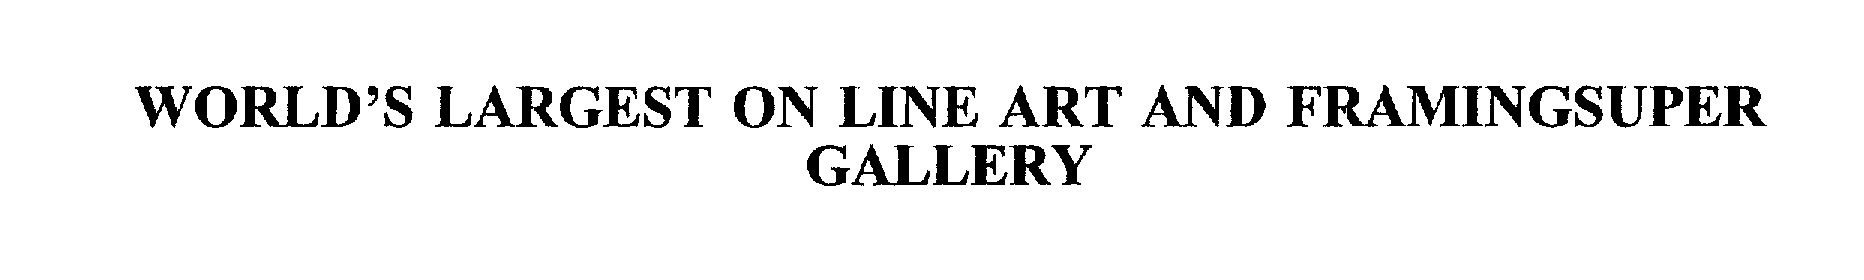  WORLD'S LARGEST ON LINE ART AND FRAMINGSUPER GALLERY